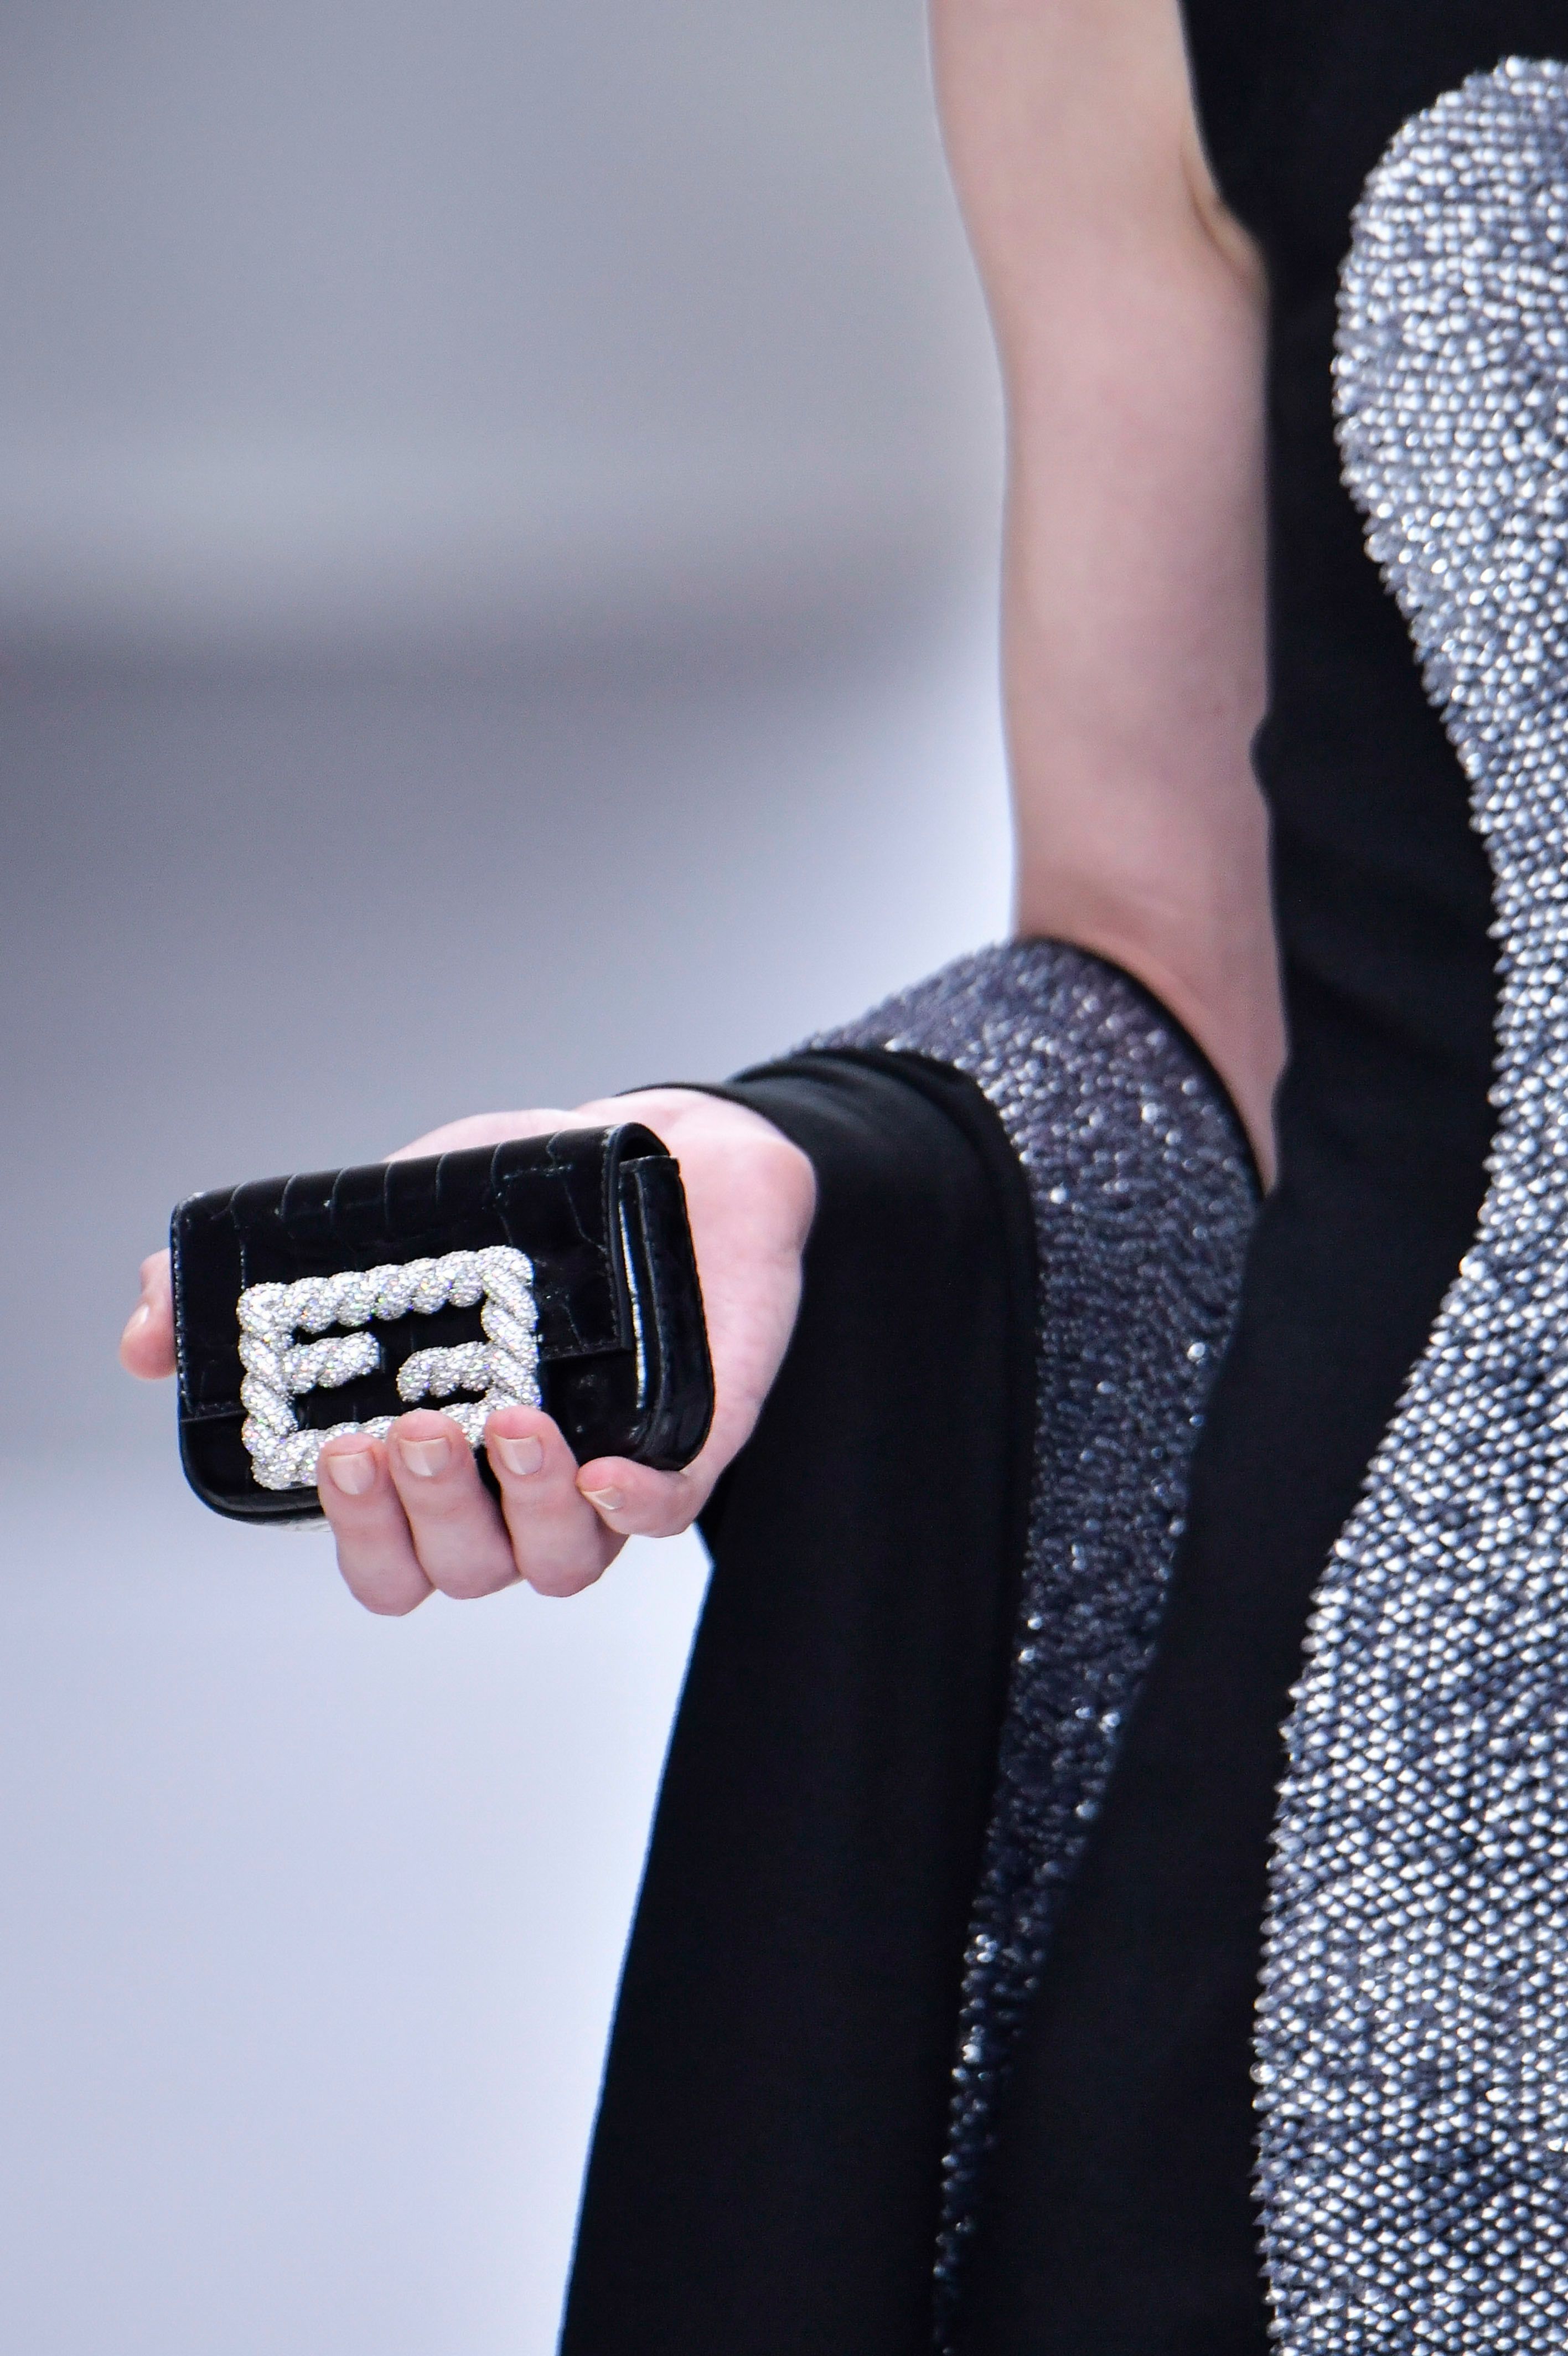 Fendi's mini Baguette bags made their debut, featuring elaborate detailing.